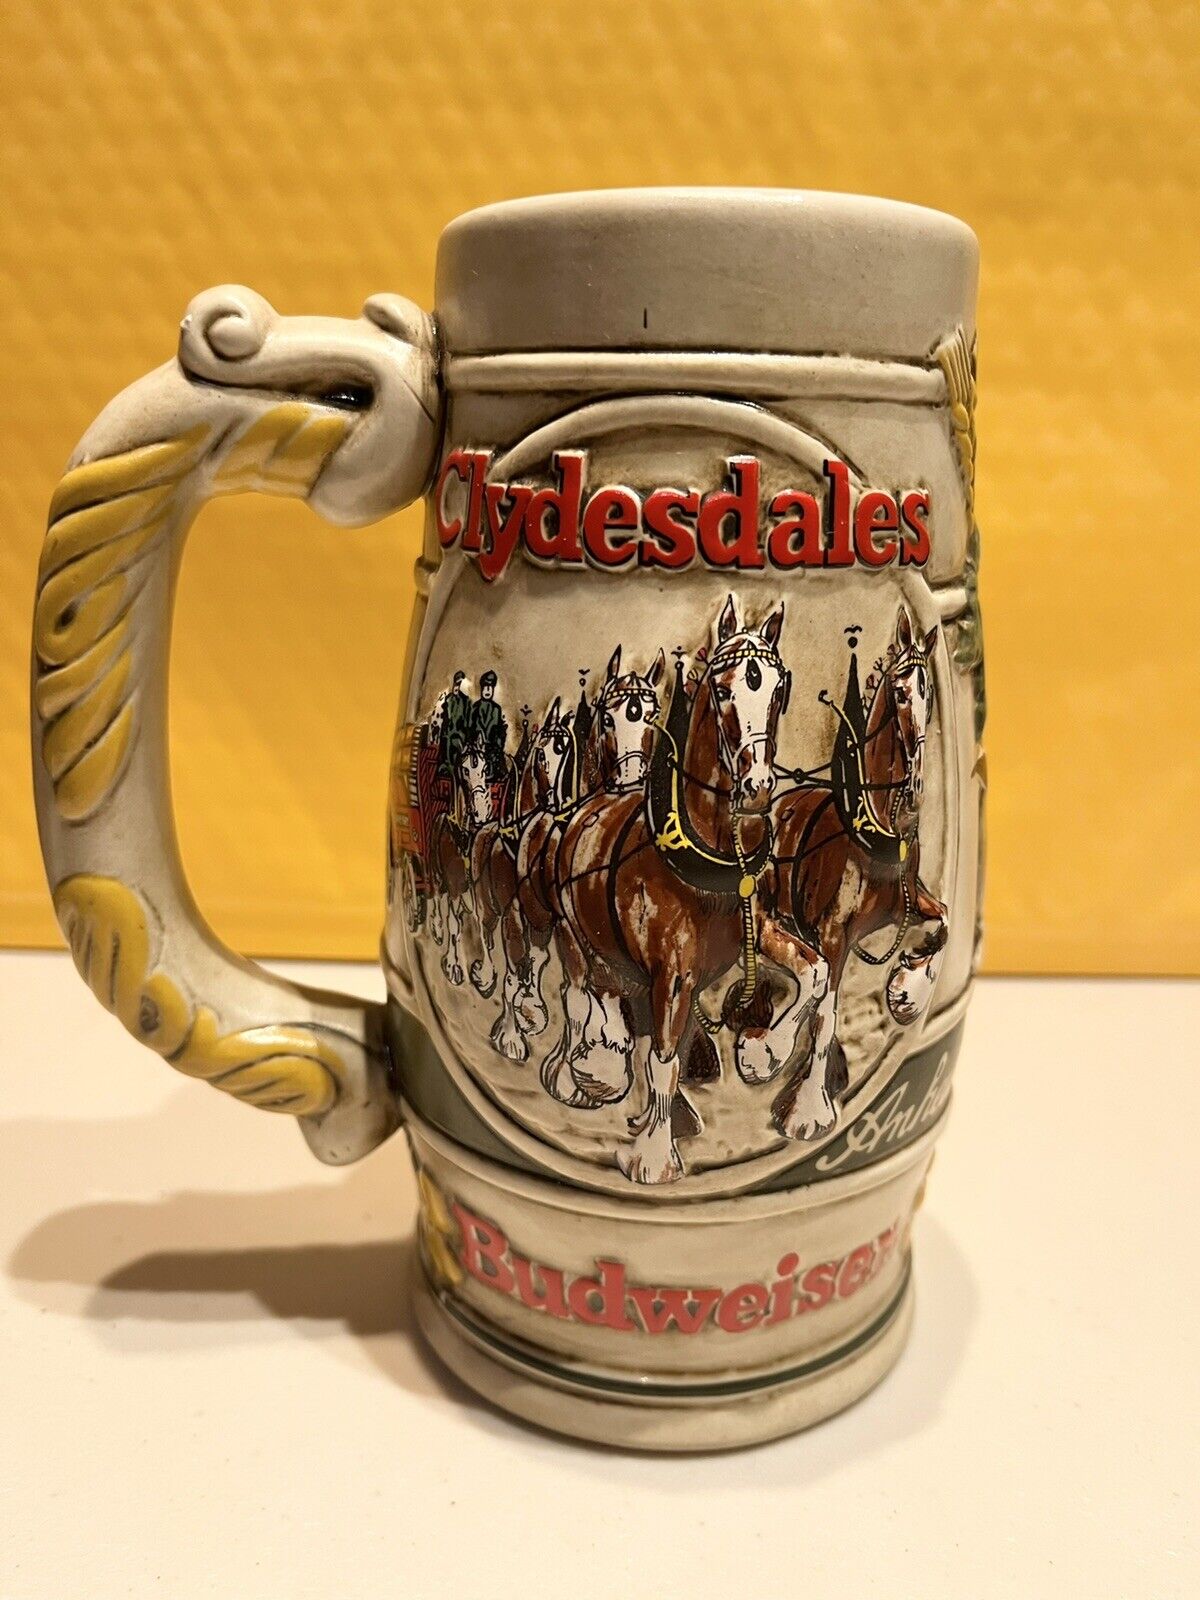 1983 CS58 Budweiser Holiday Stein Clydesdale Ceramarte Beer Mug 6.5in tall mint